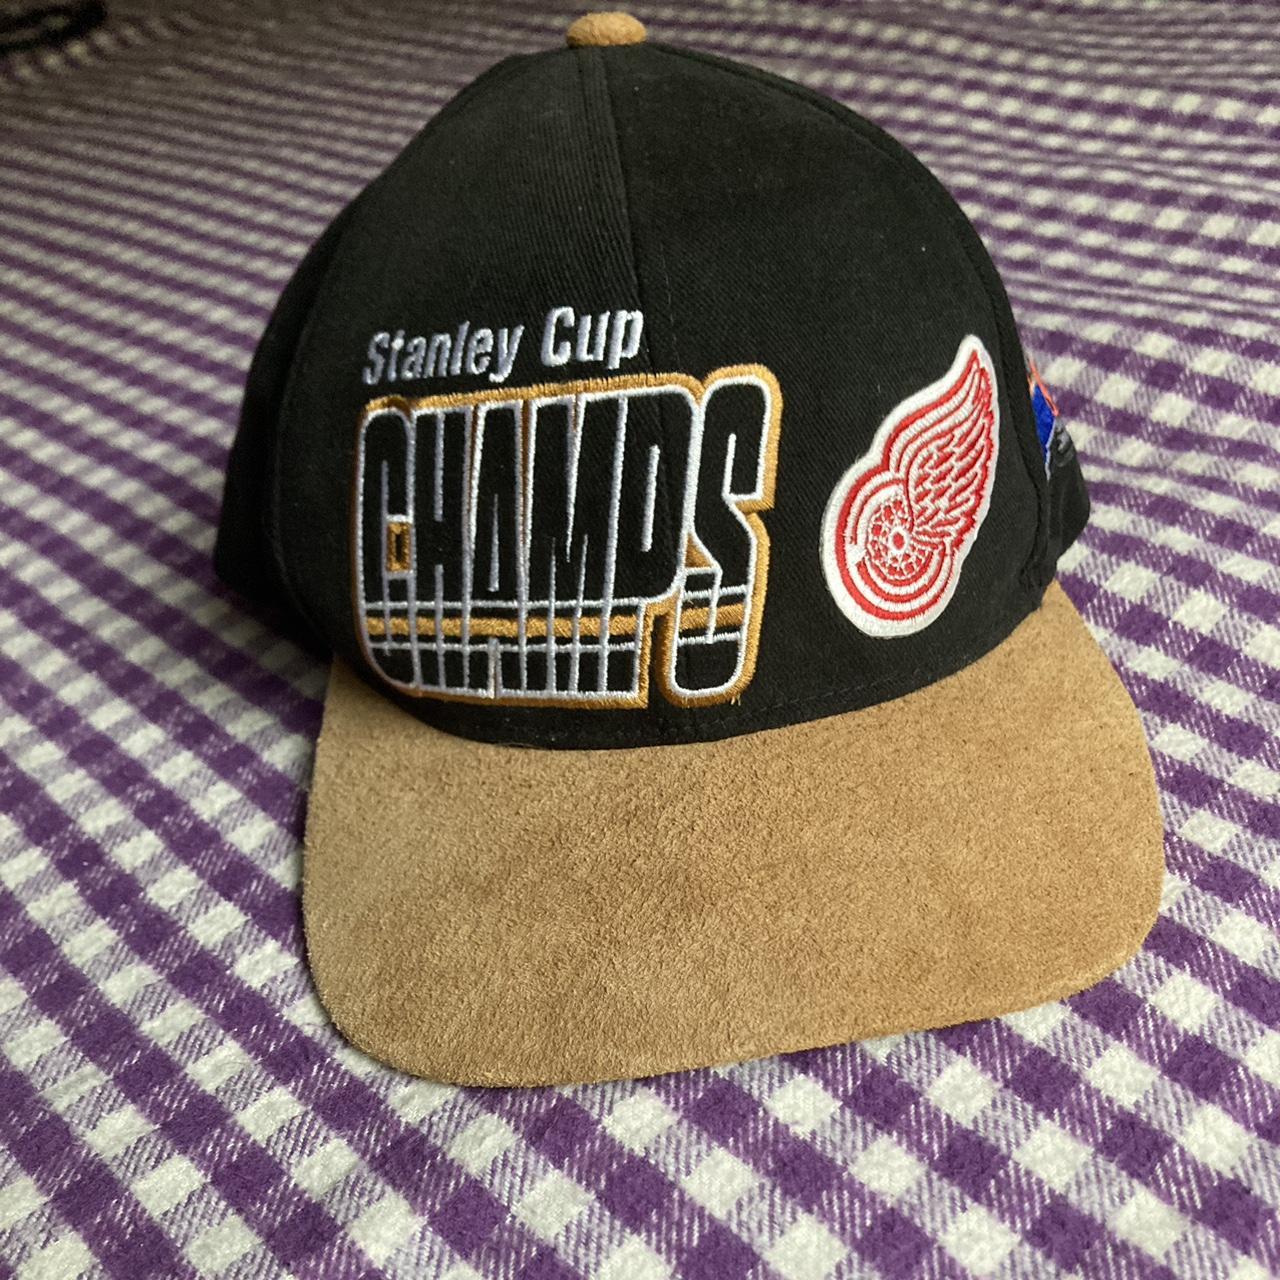 Vintage/90s Red Wings Stanley Cup Champions hat - Depop